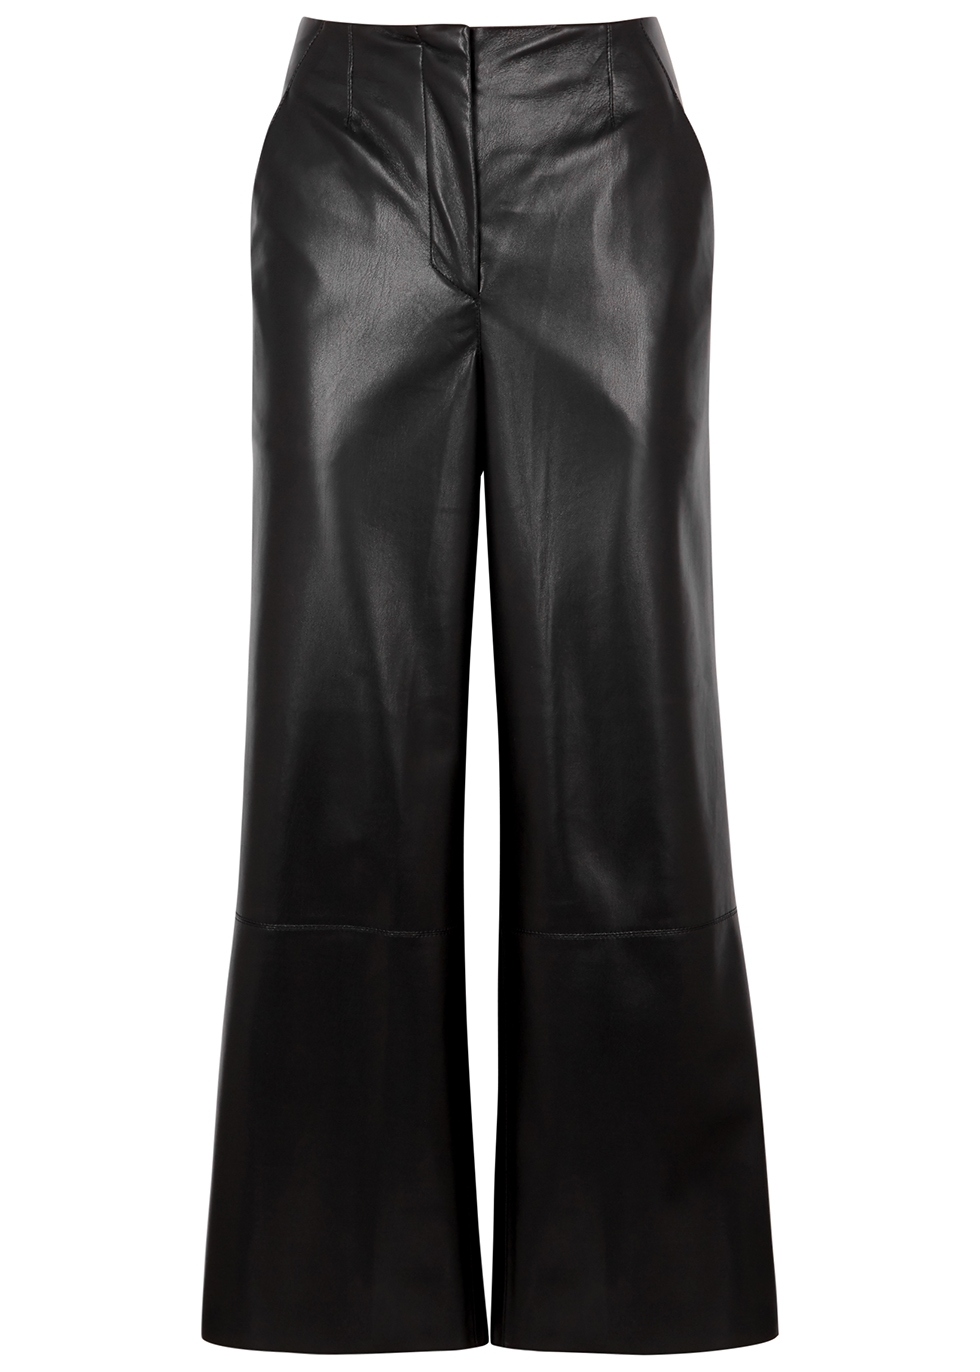 Nanushka Africa black faux leather trousers - Harvey Nichols